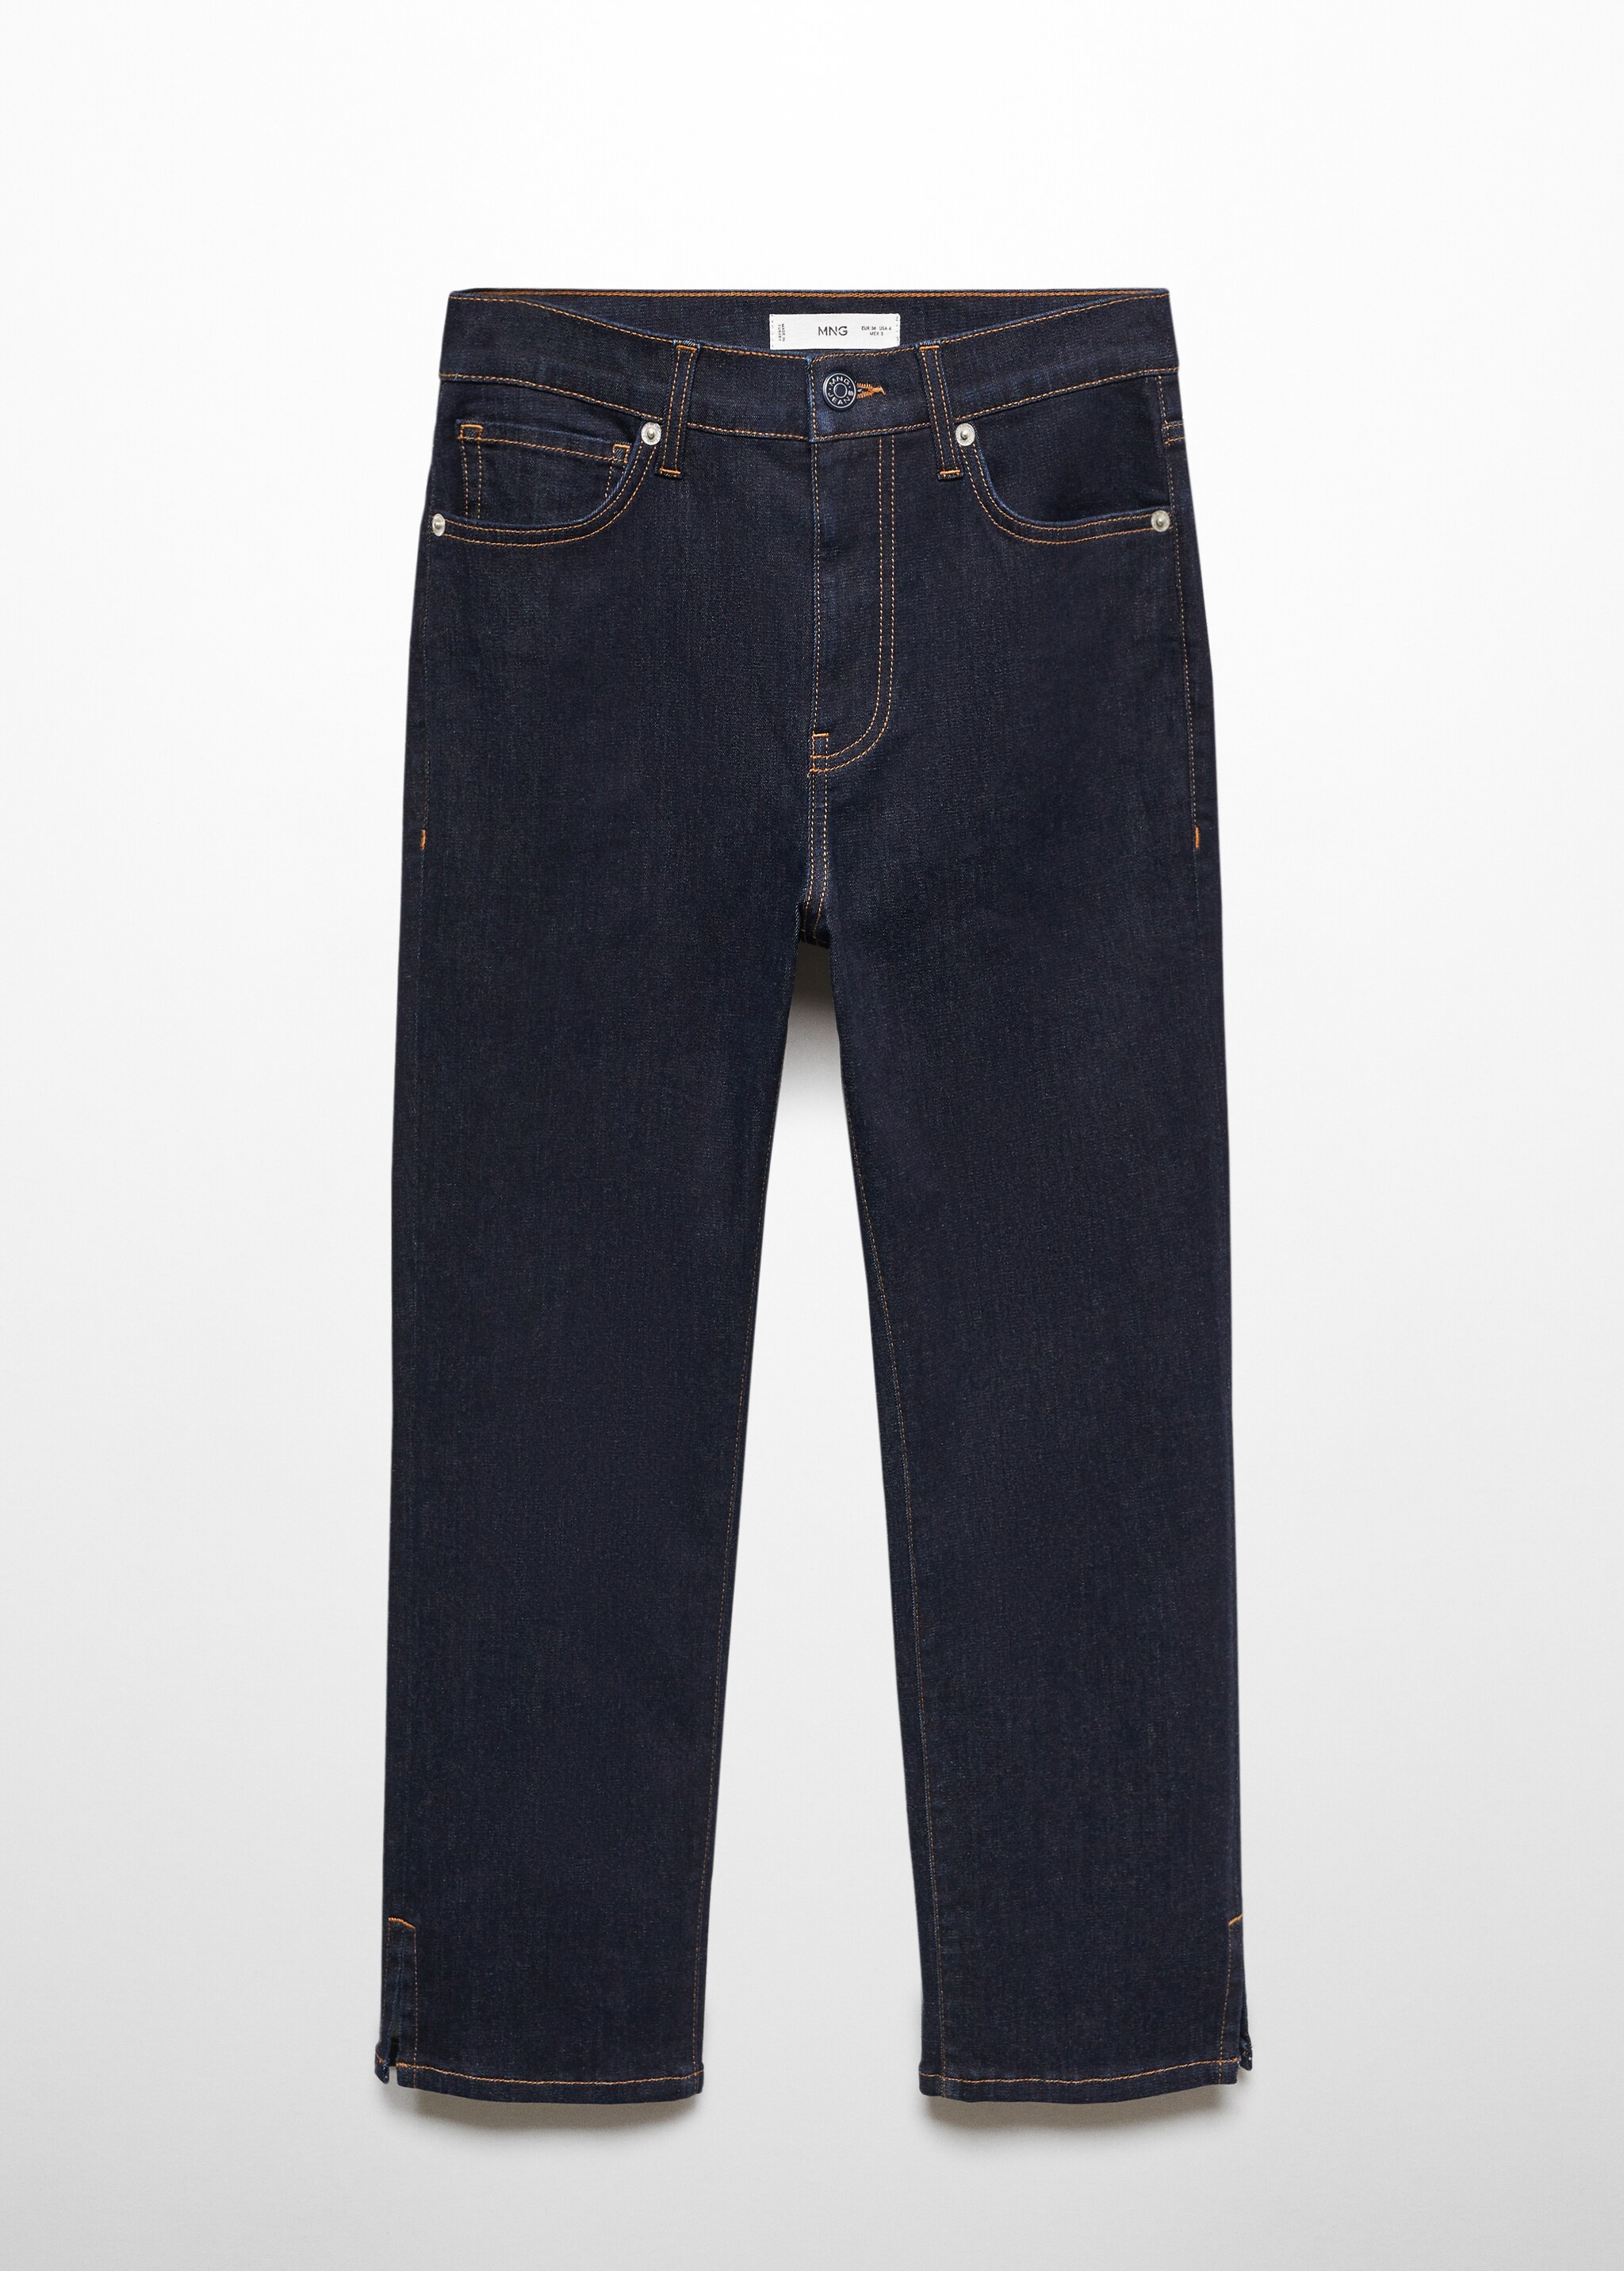 Jeans capri abertura lateral - Artículo sin modelo